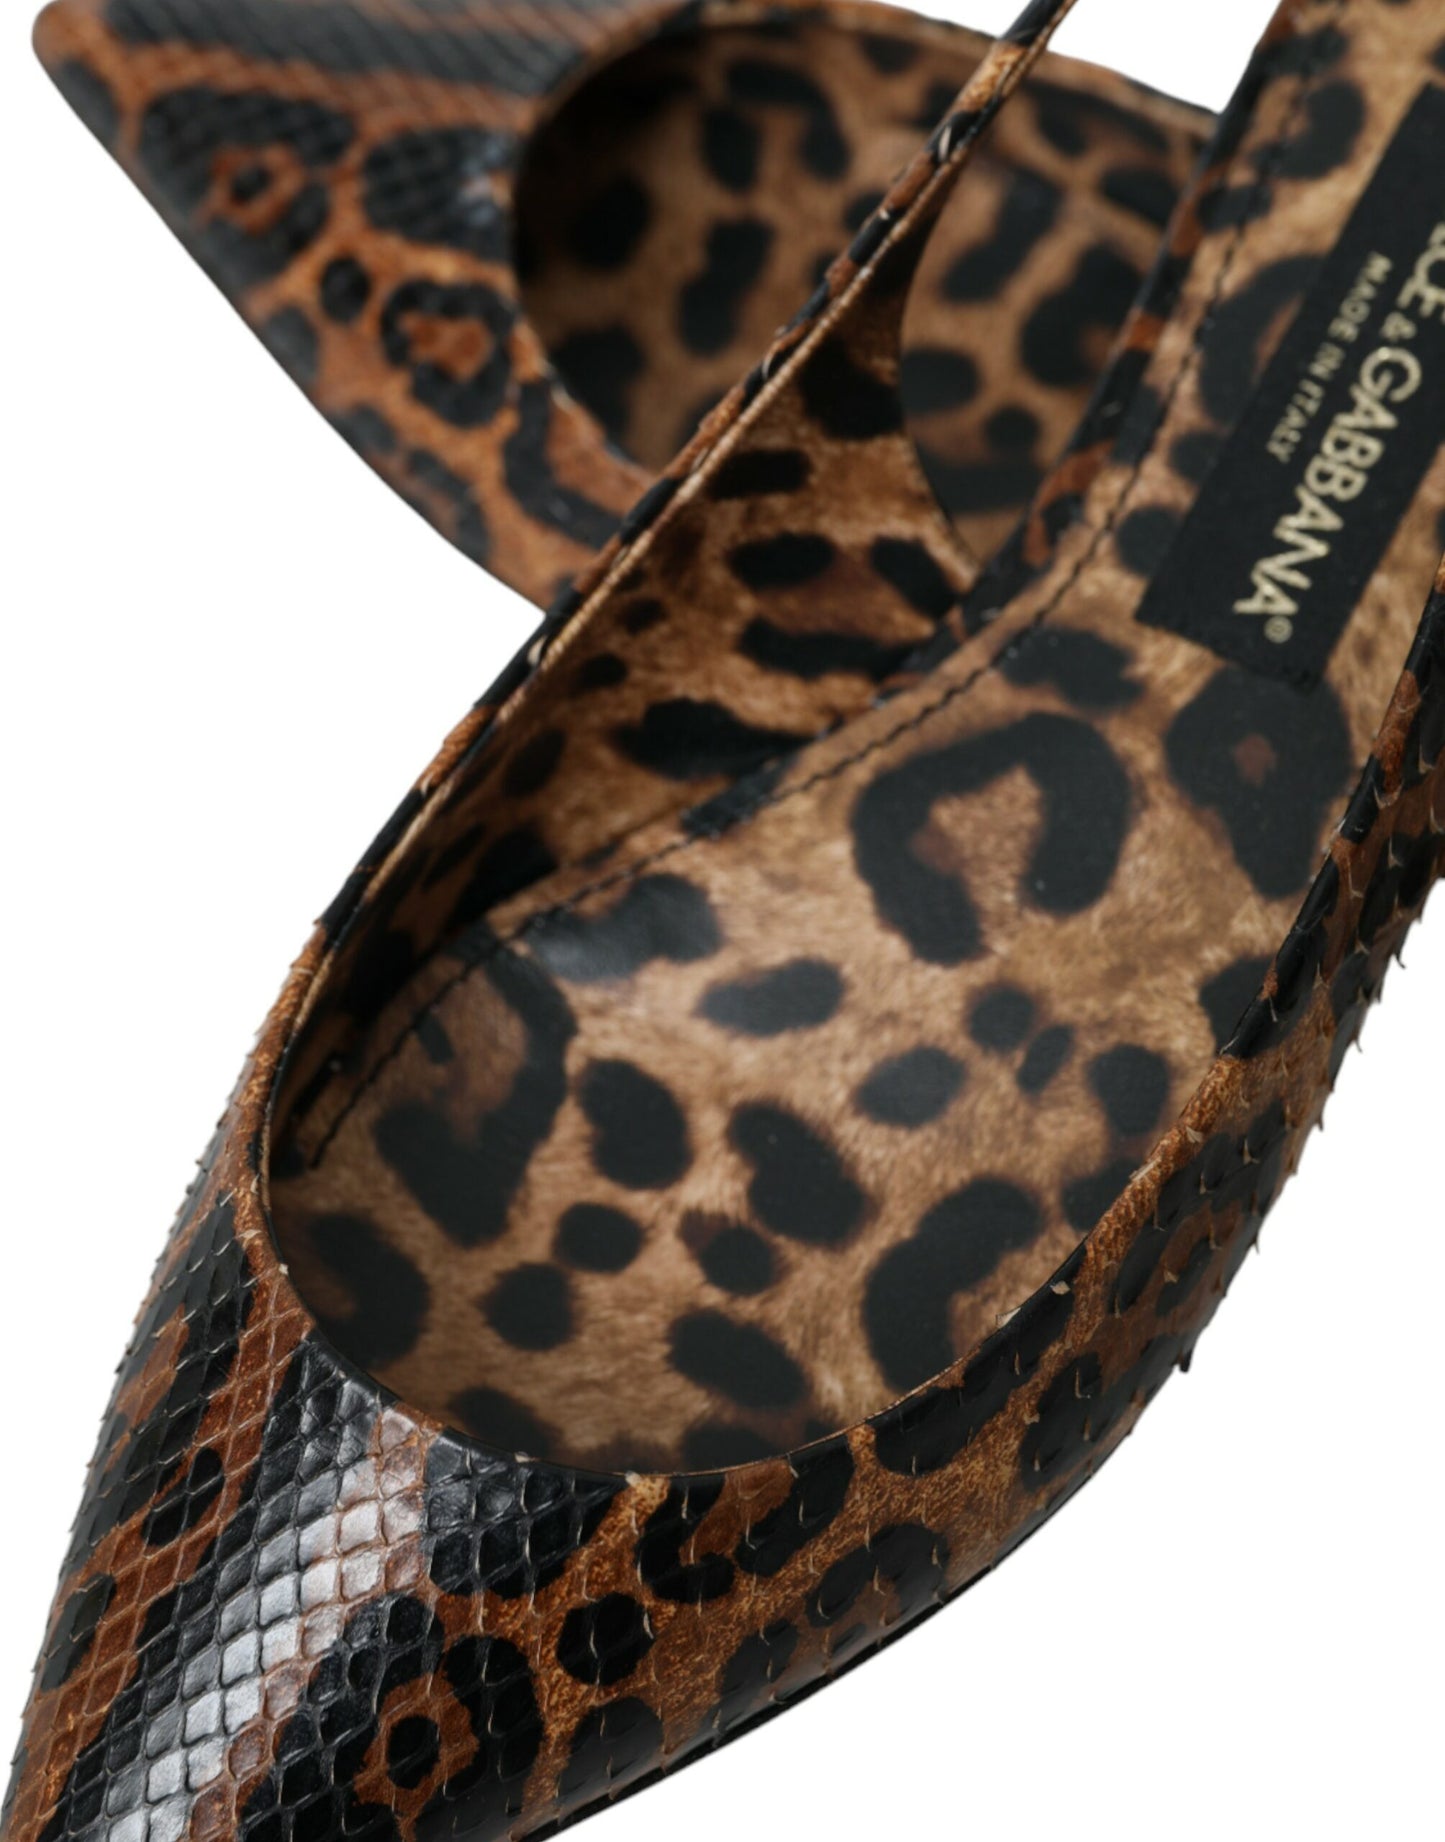 Dolce & Gabbana Brown Leopard Exotic Skin Slingback Shoes